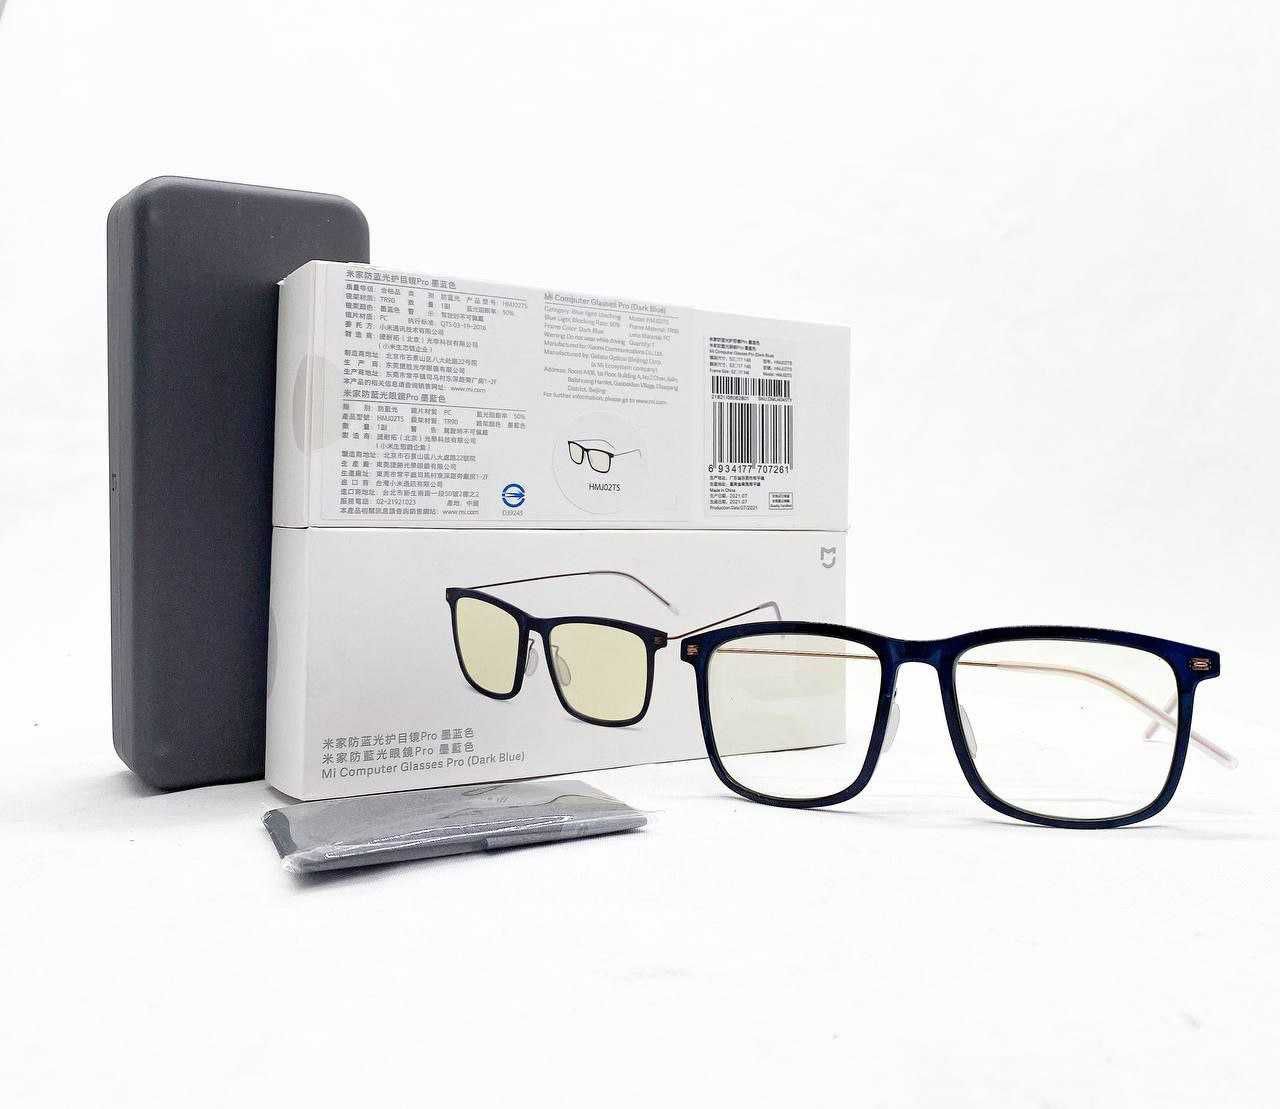 Ko'zoynak Mi Computer Glasses Pro HMJ02TS / компьютерные очки + чехол